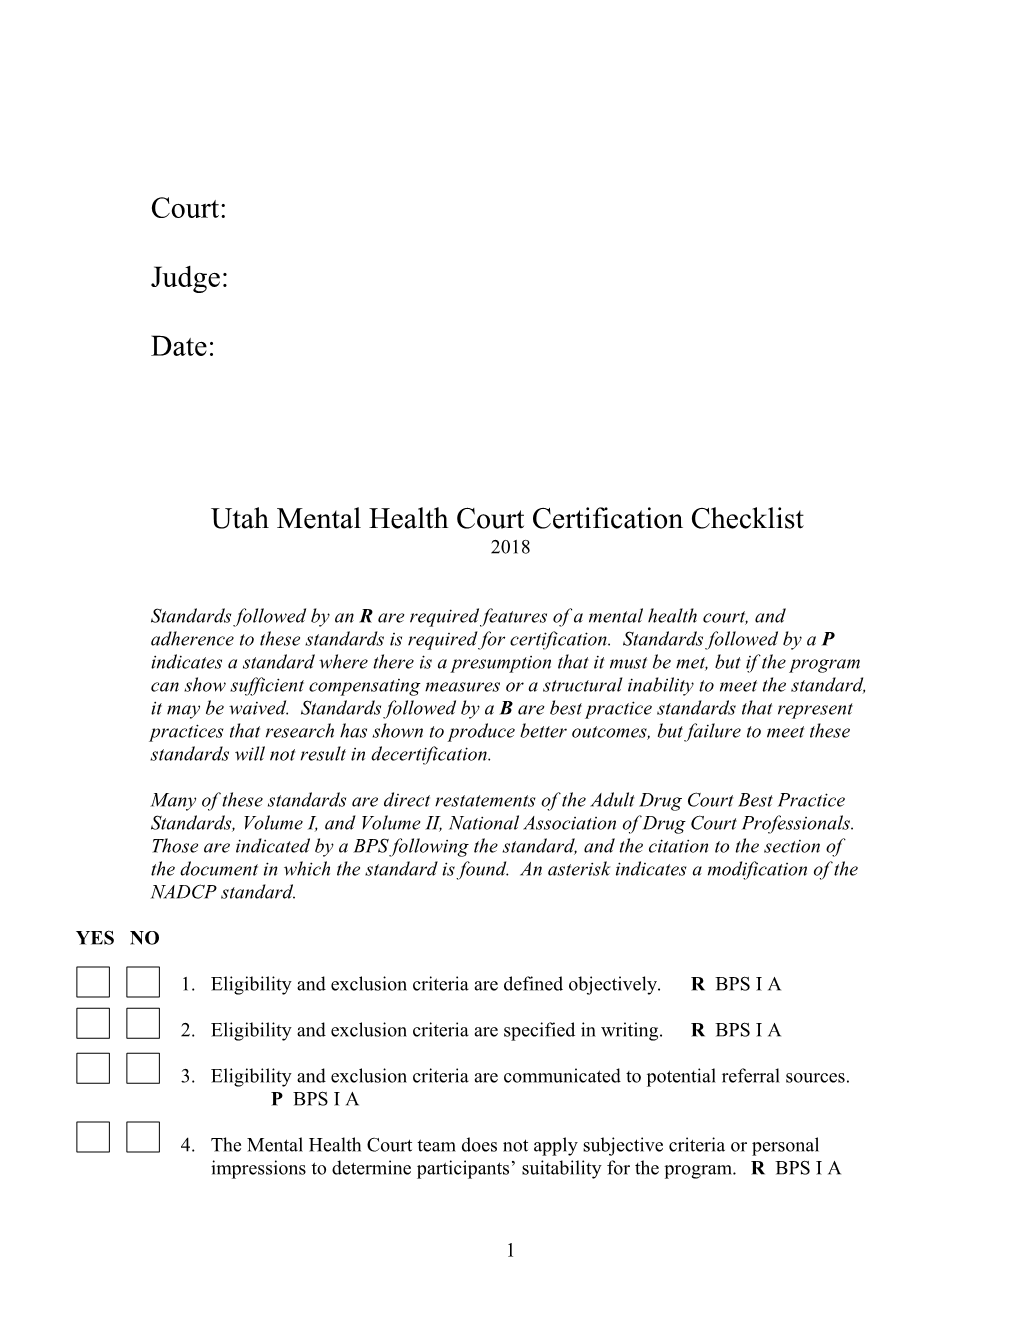 Utah Mental Health Court Certification Checklist - 2018